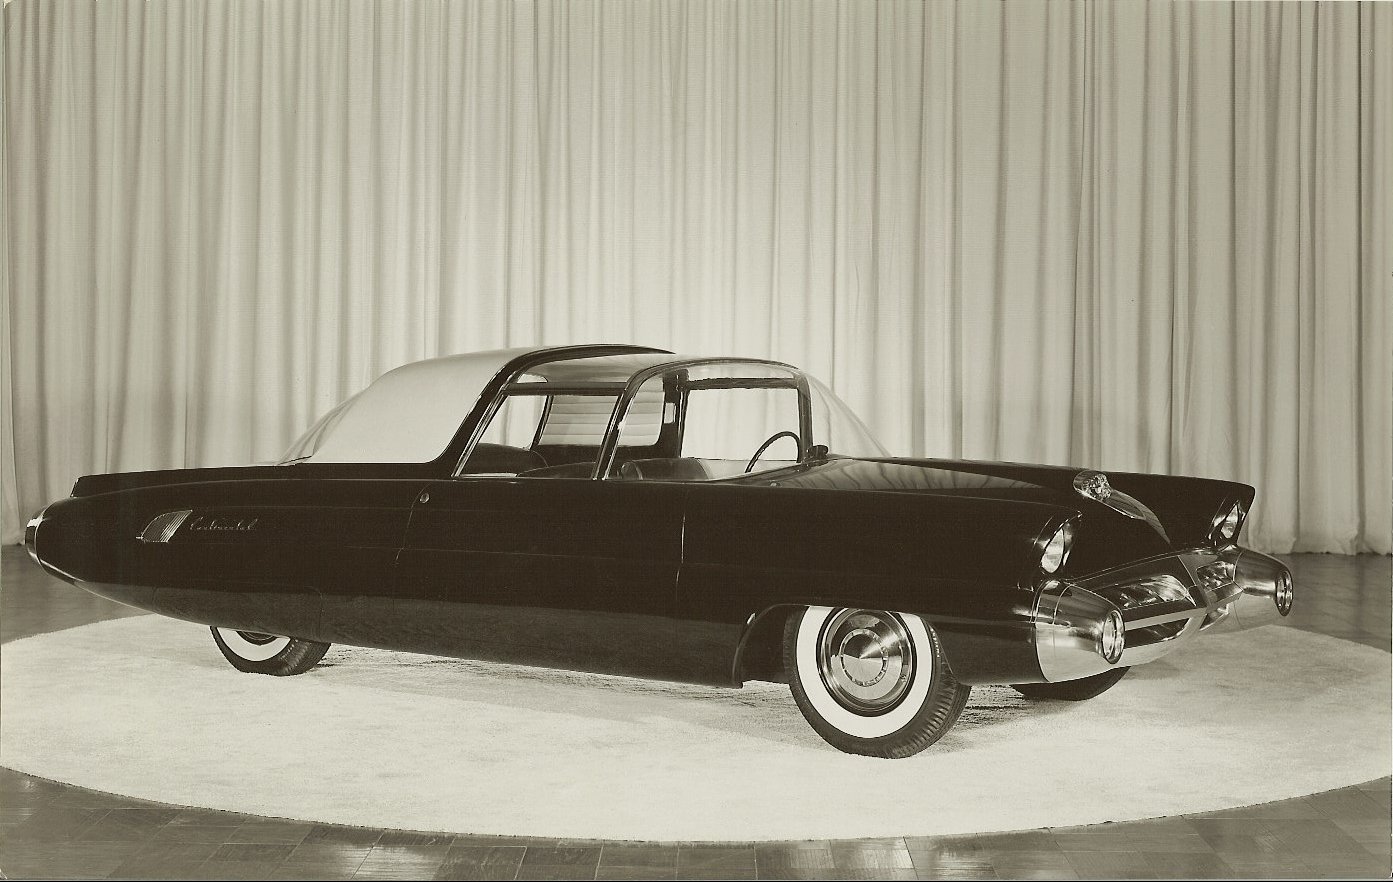 Lincoln Continental 195X, 1952